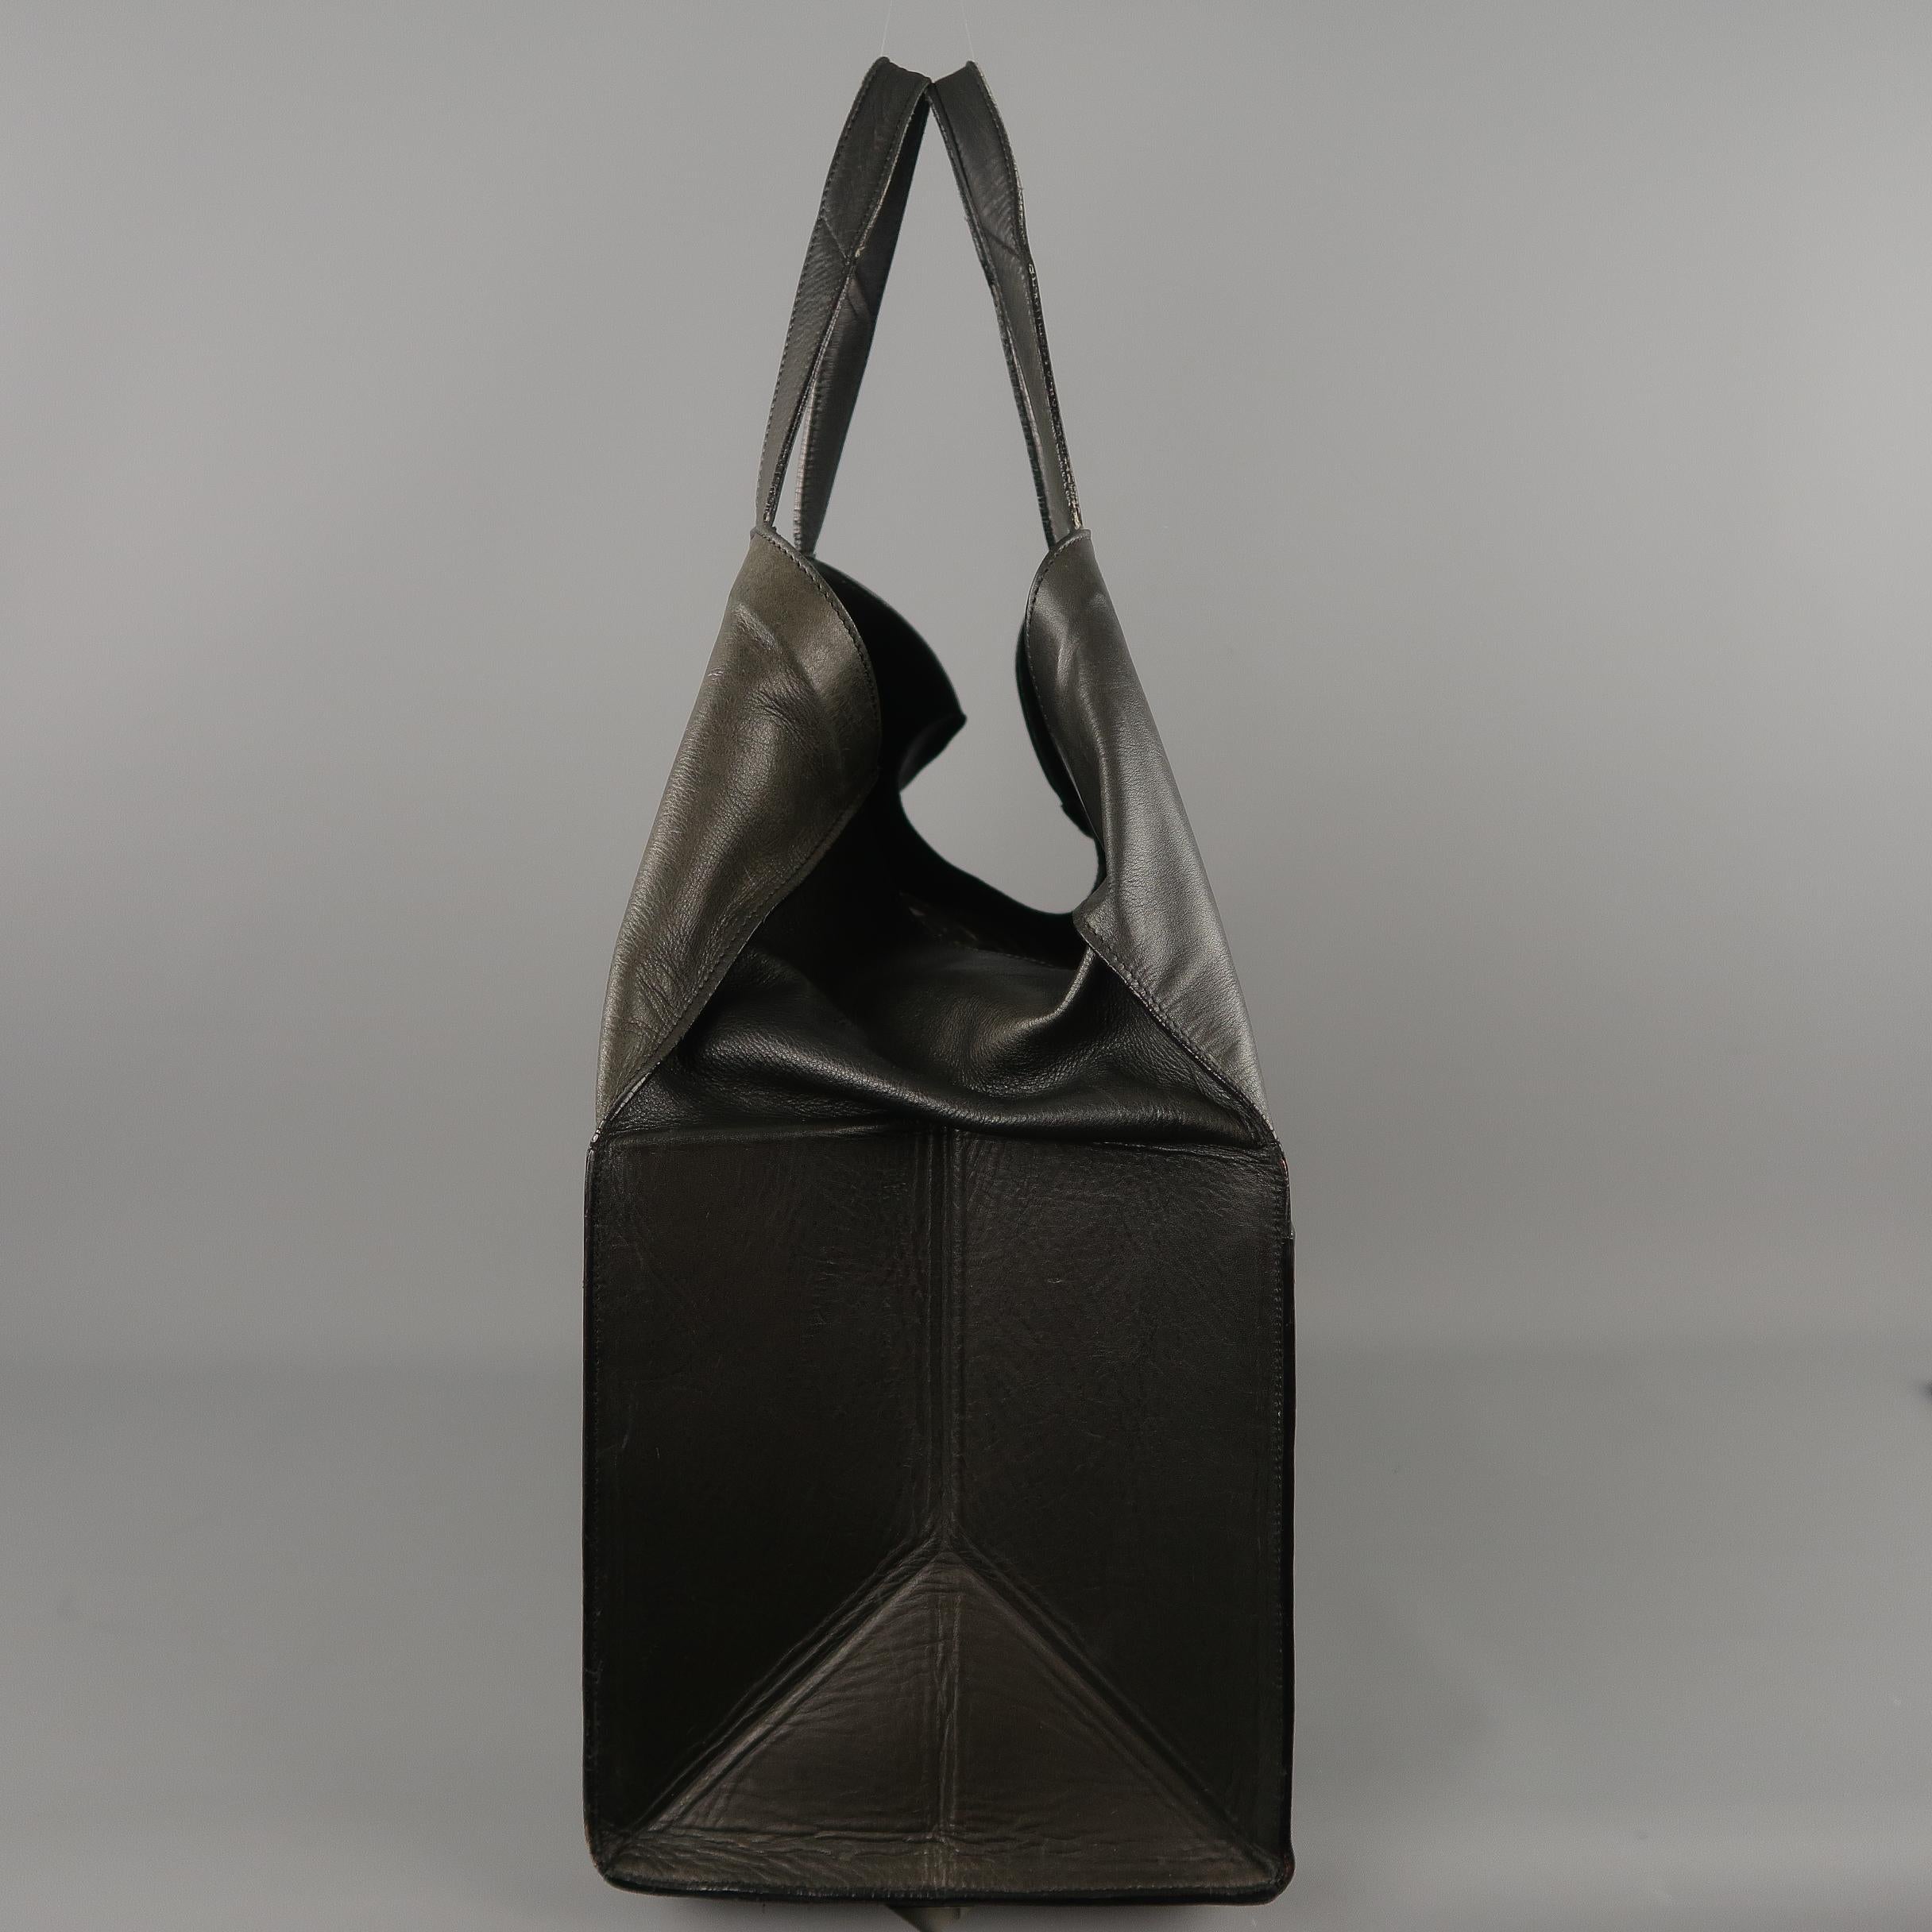 MAISON MARTIN MARGIELA Black Leather Icons Shopper / Clutch Tote Bag 2